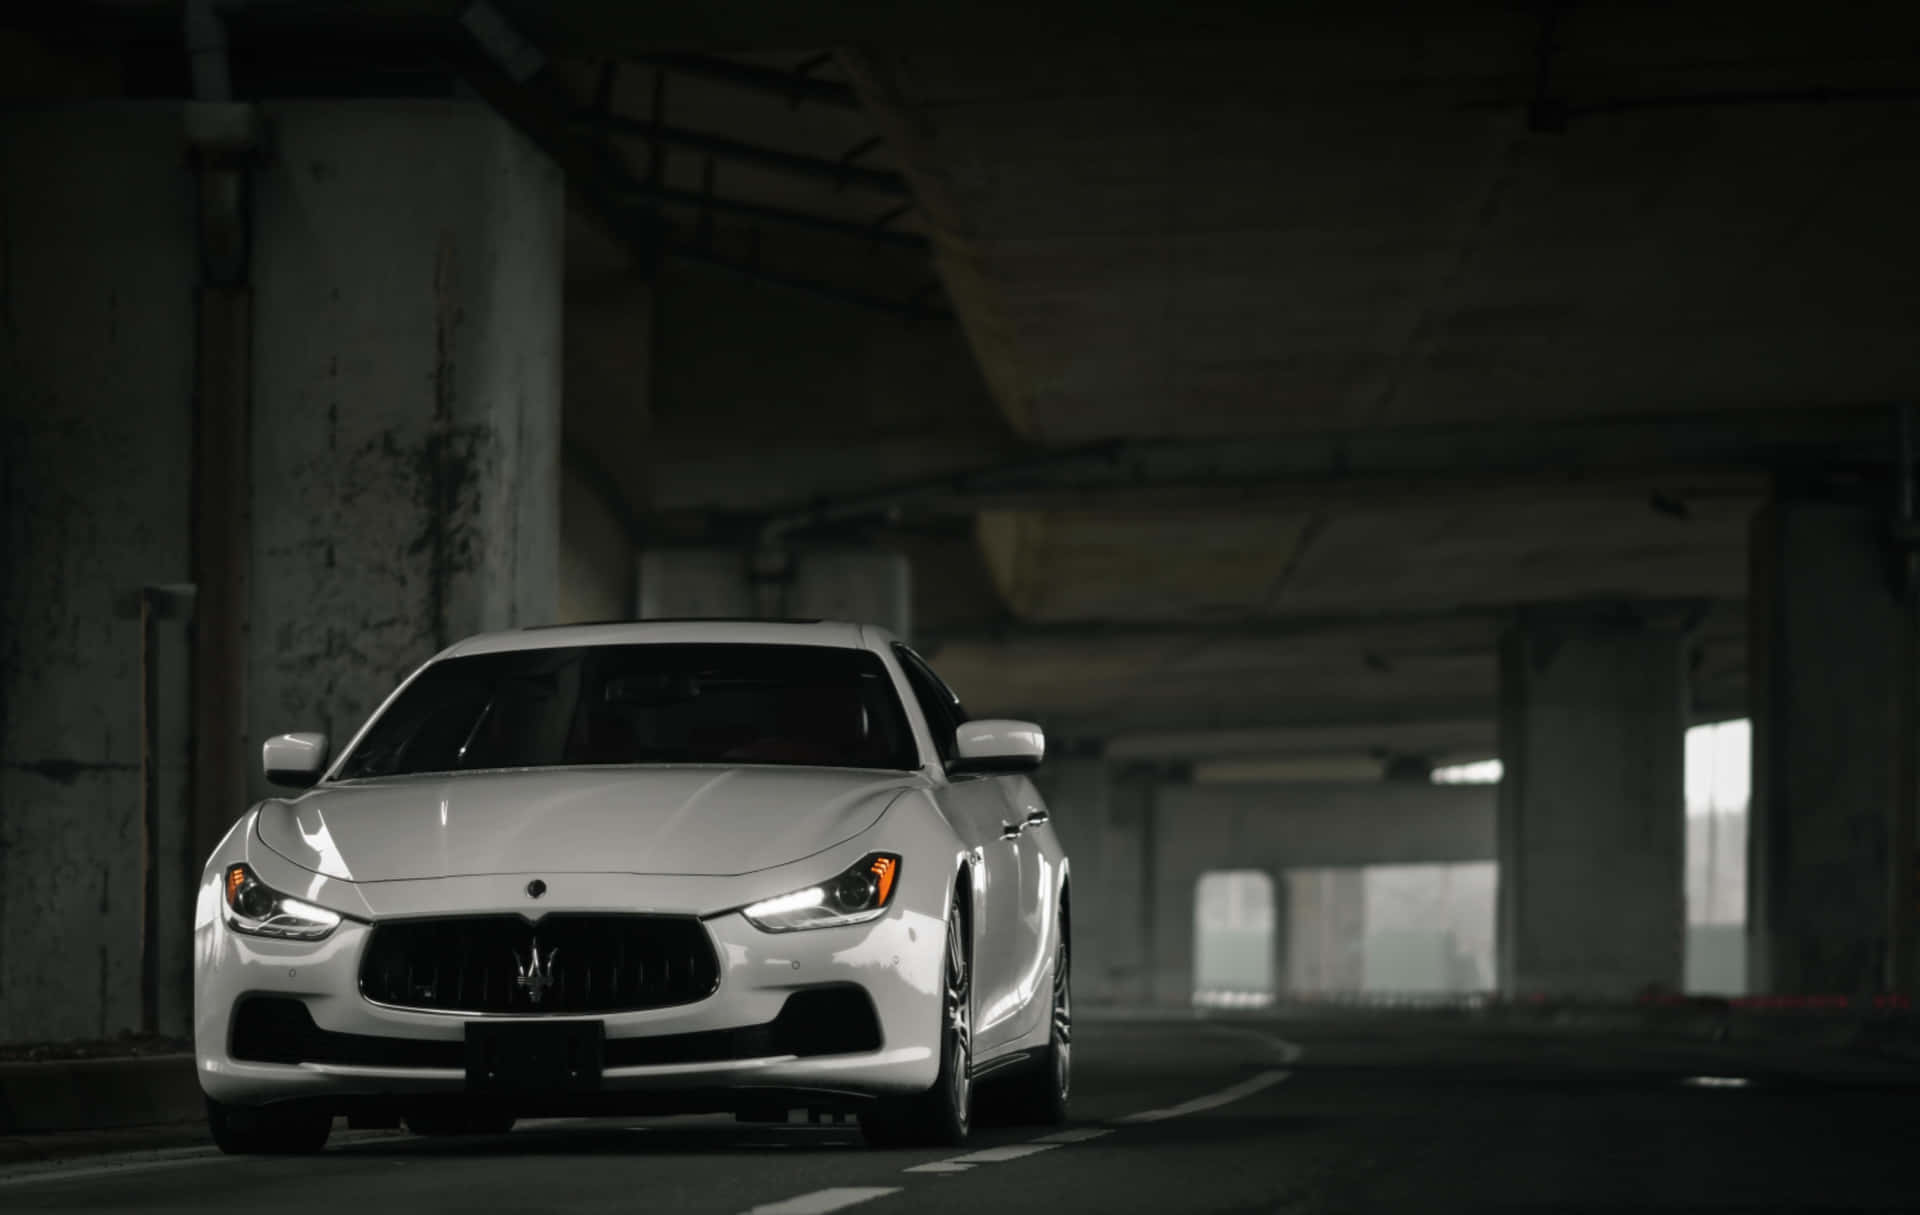 Maserati Ghibli Cruising in the Night City Wallpaper